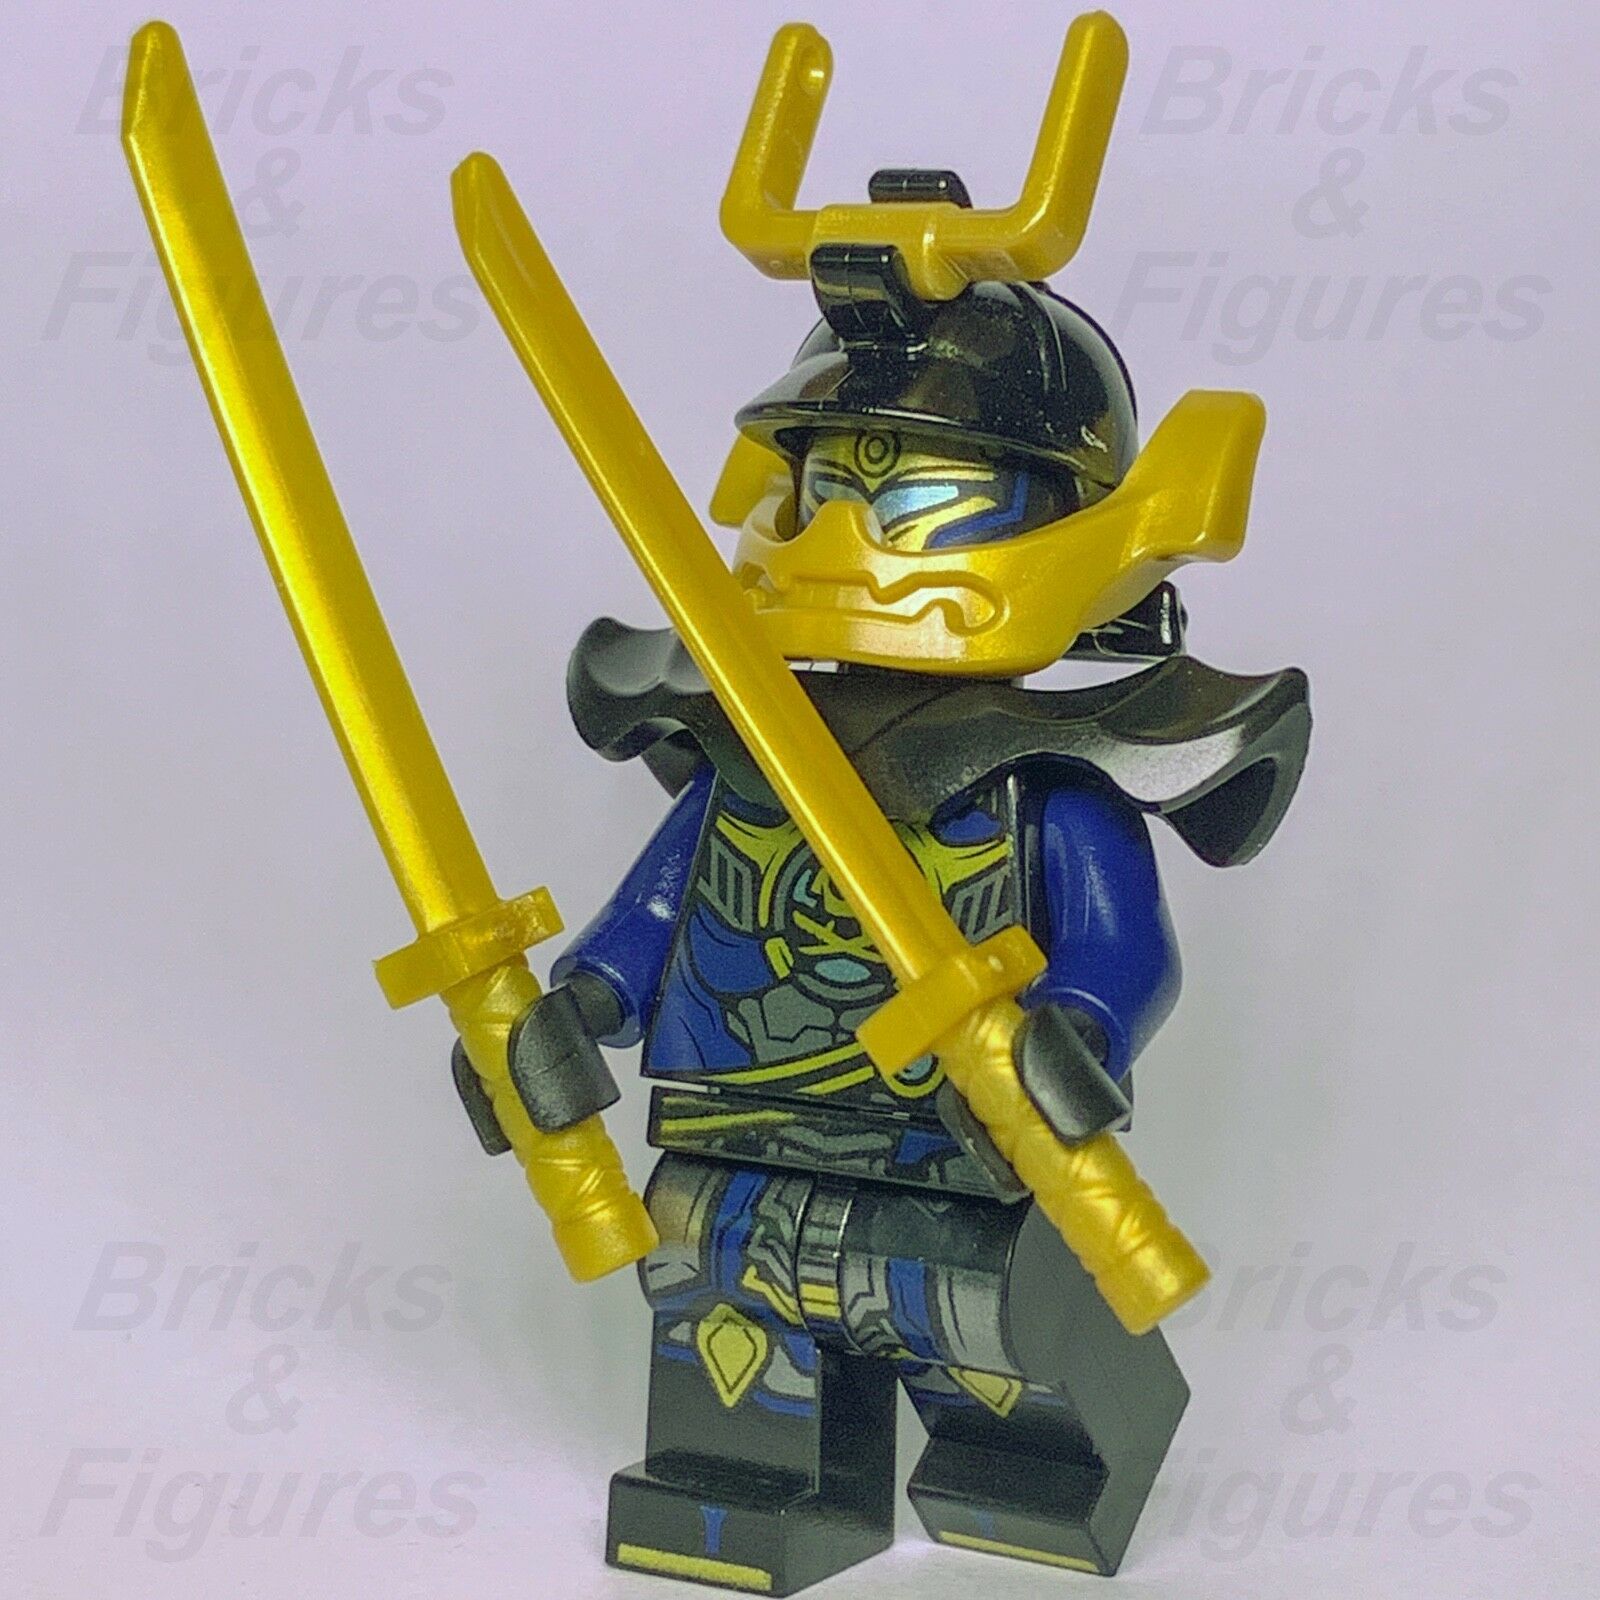 Ninjago LEGO Samurai X P.I.X.A.L. Hands of Time Pixal Android Minifigure 70625 - Bricks & Figures